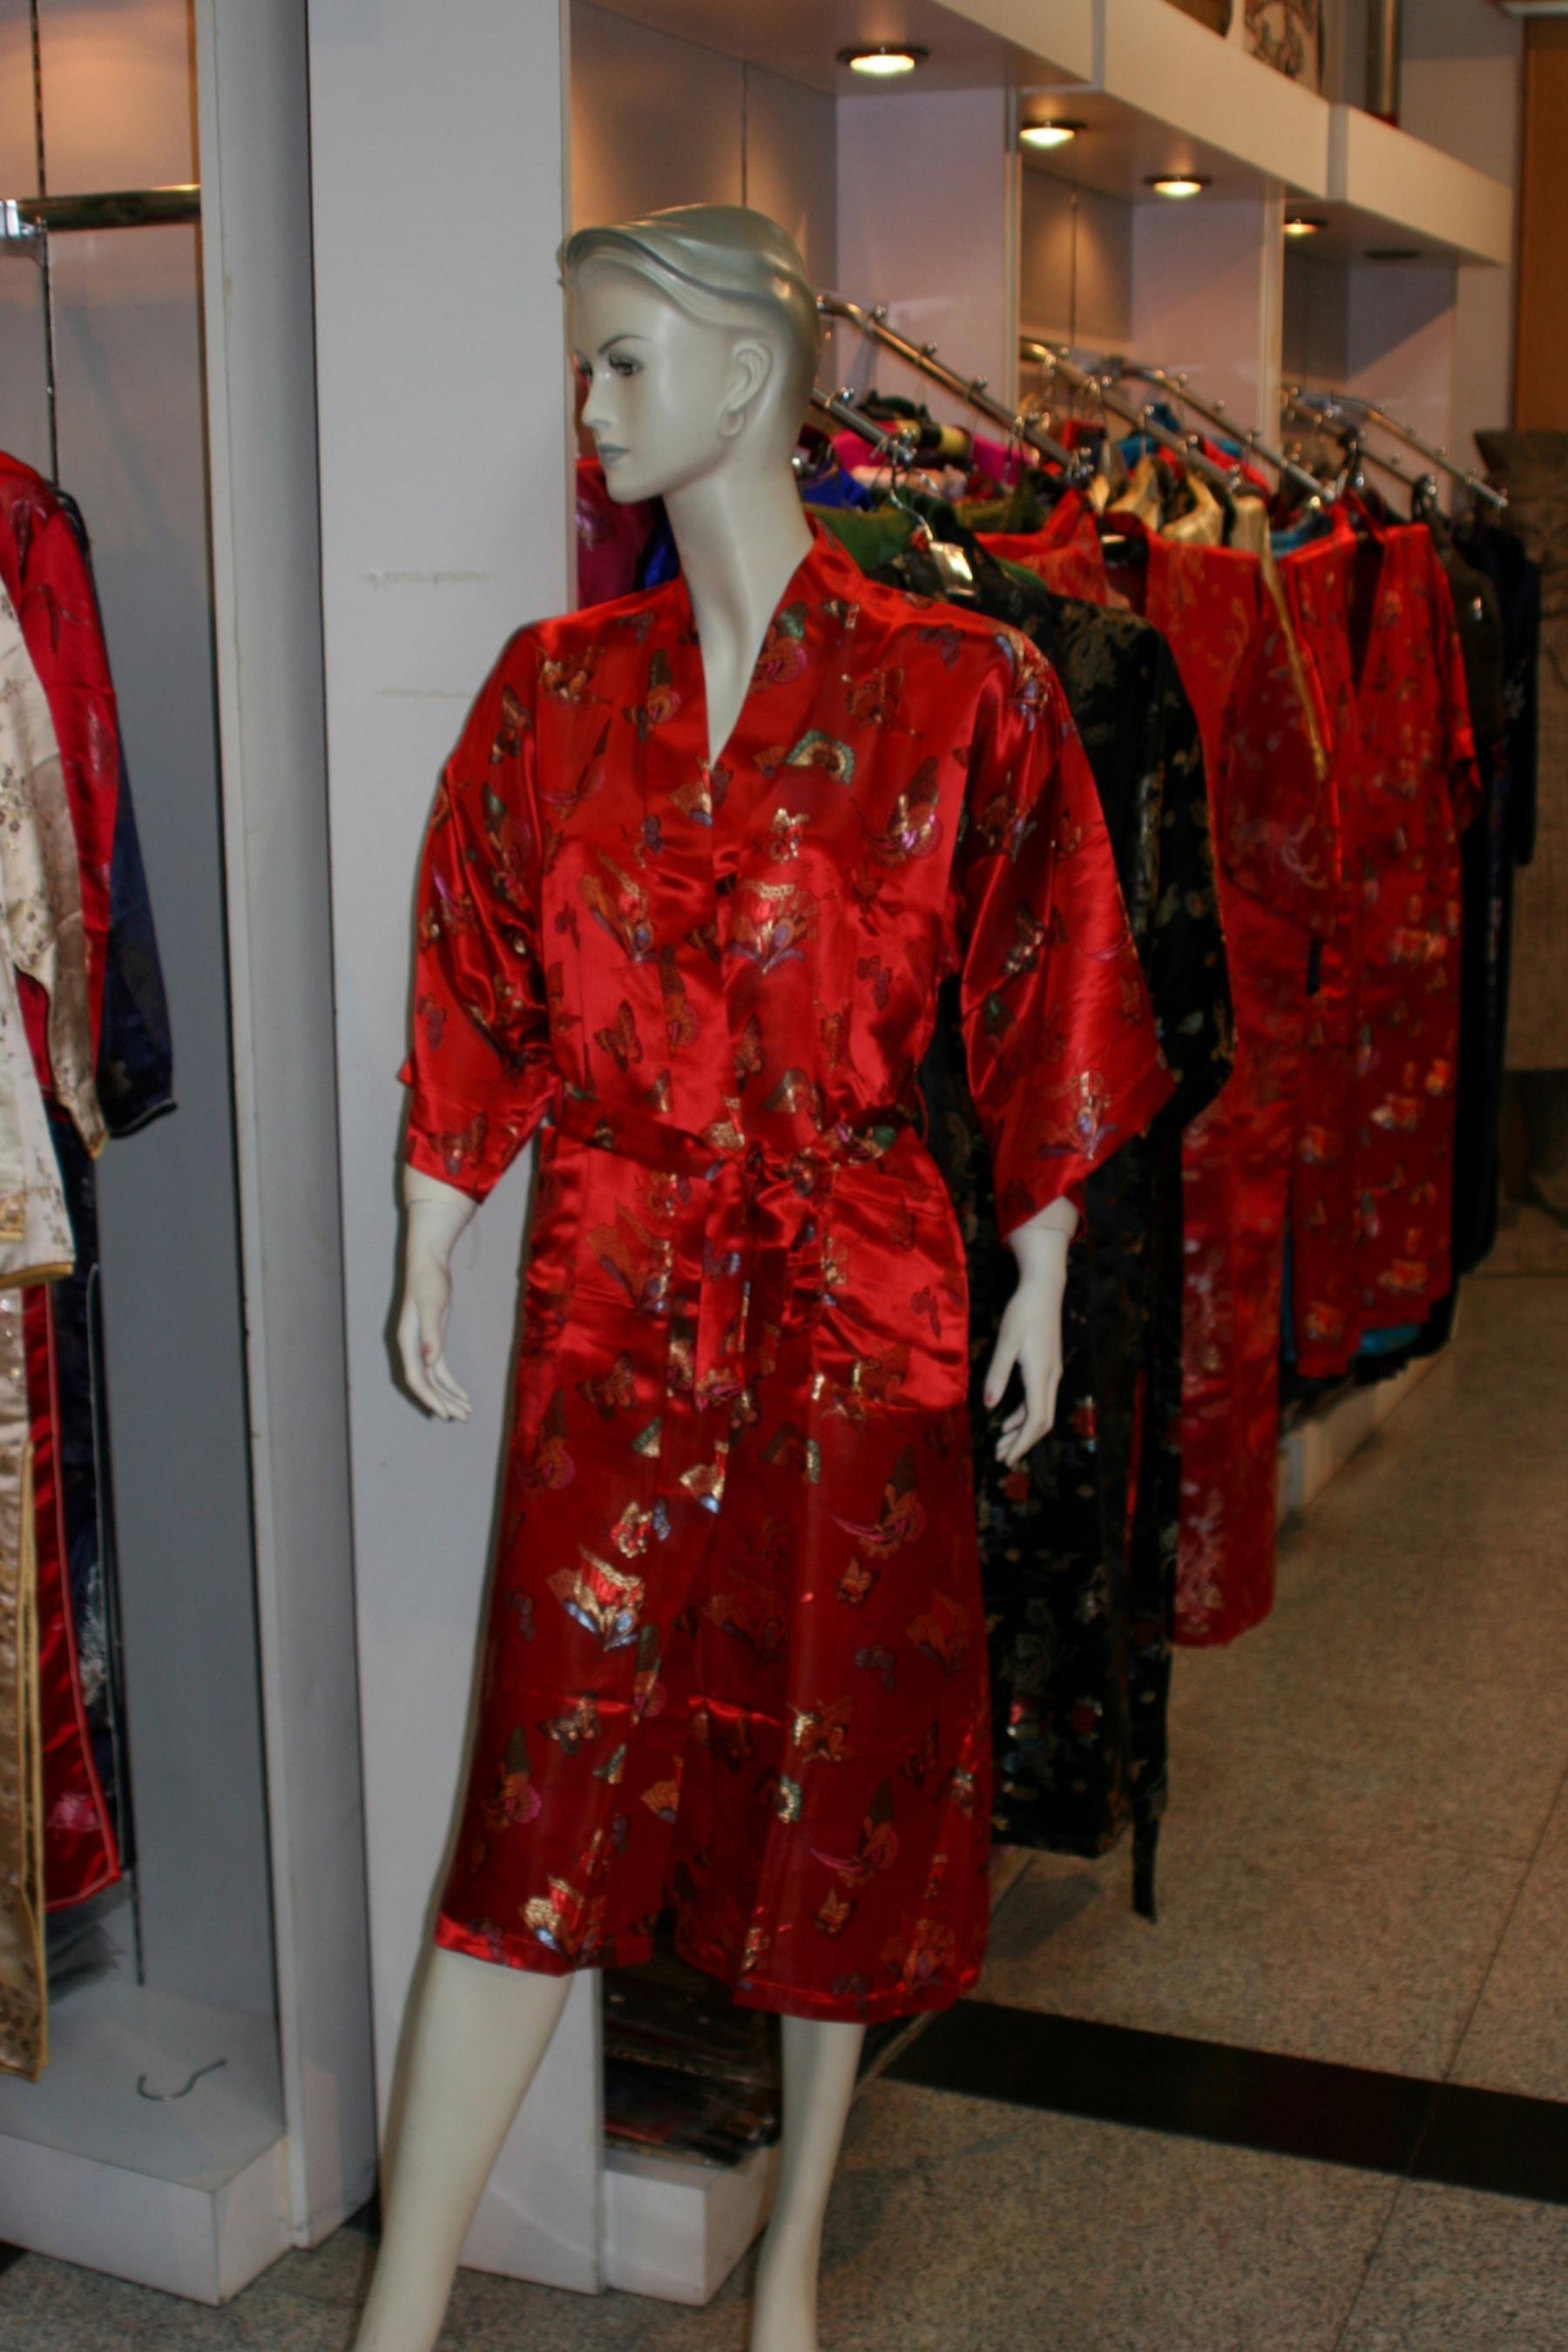 Chinese women's clothing